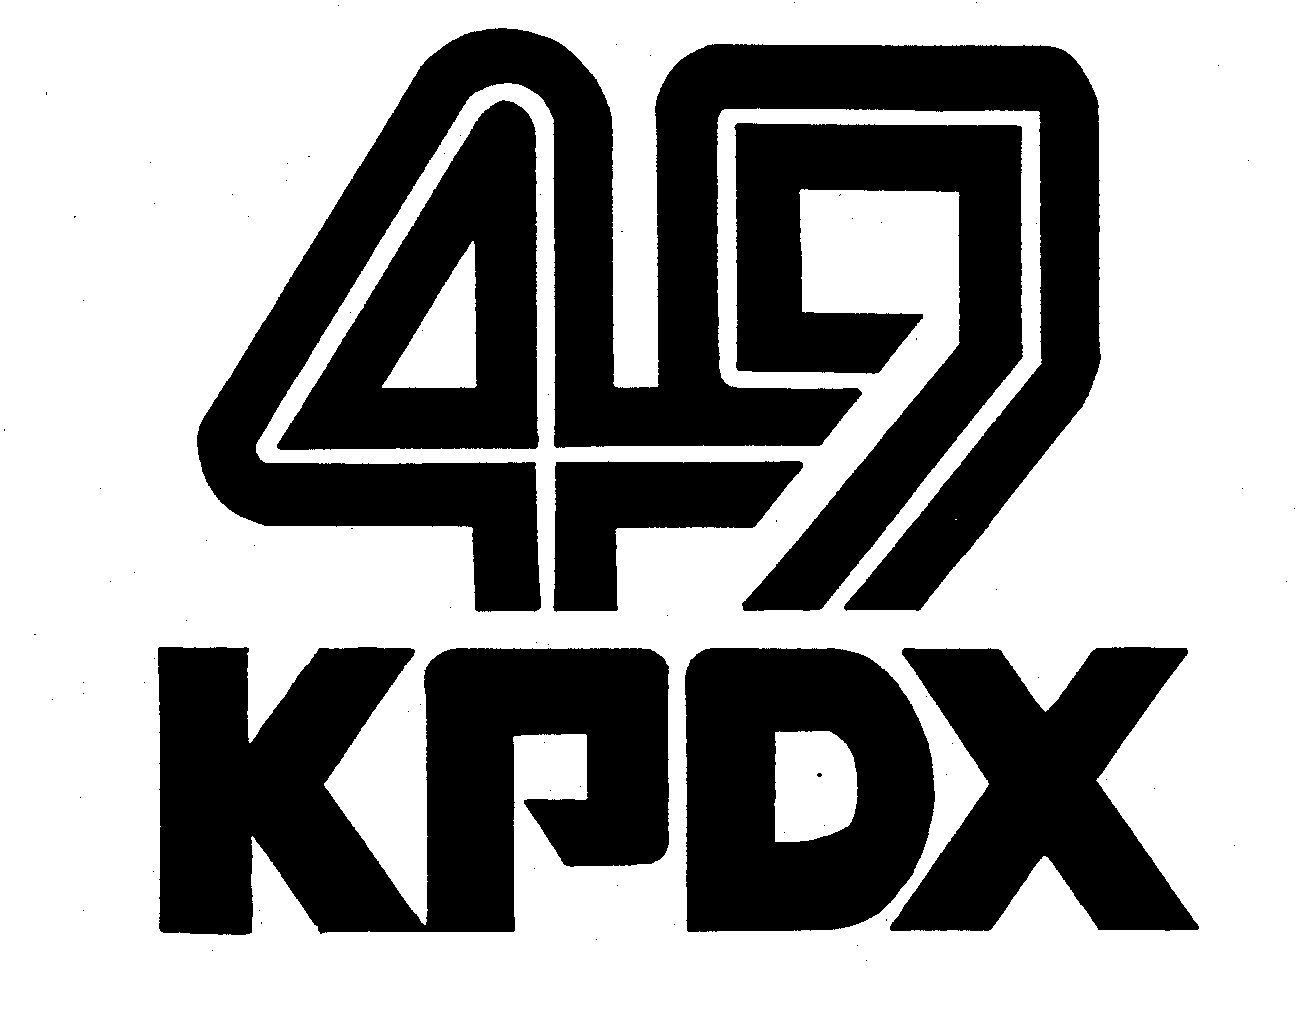  KPDX 49